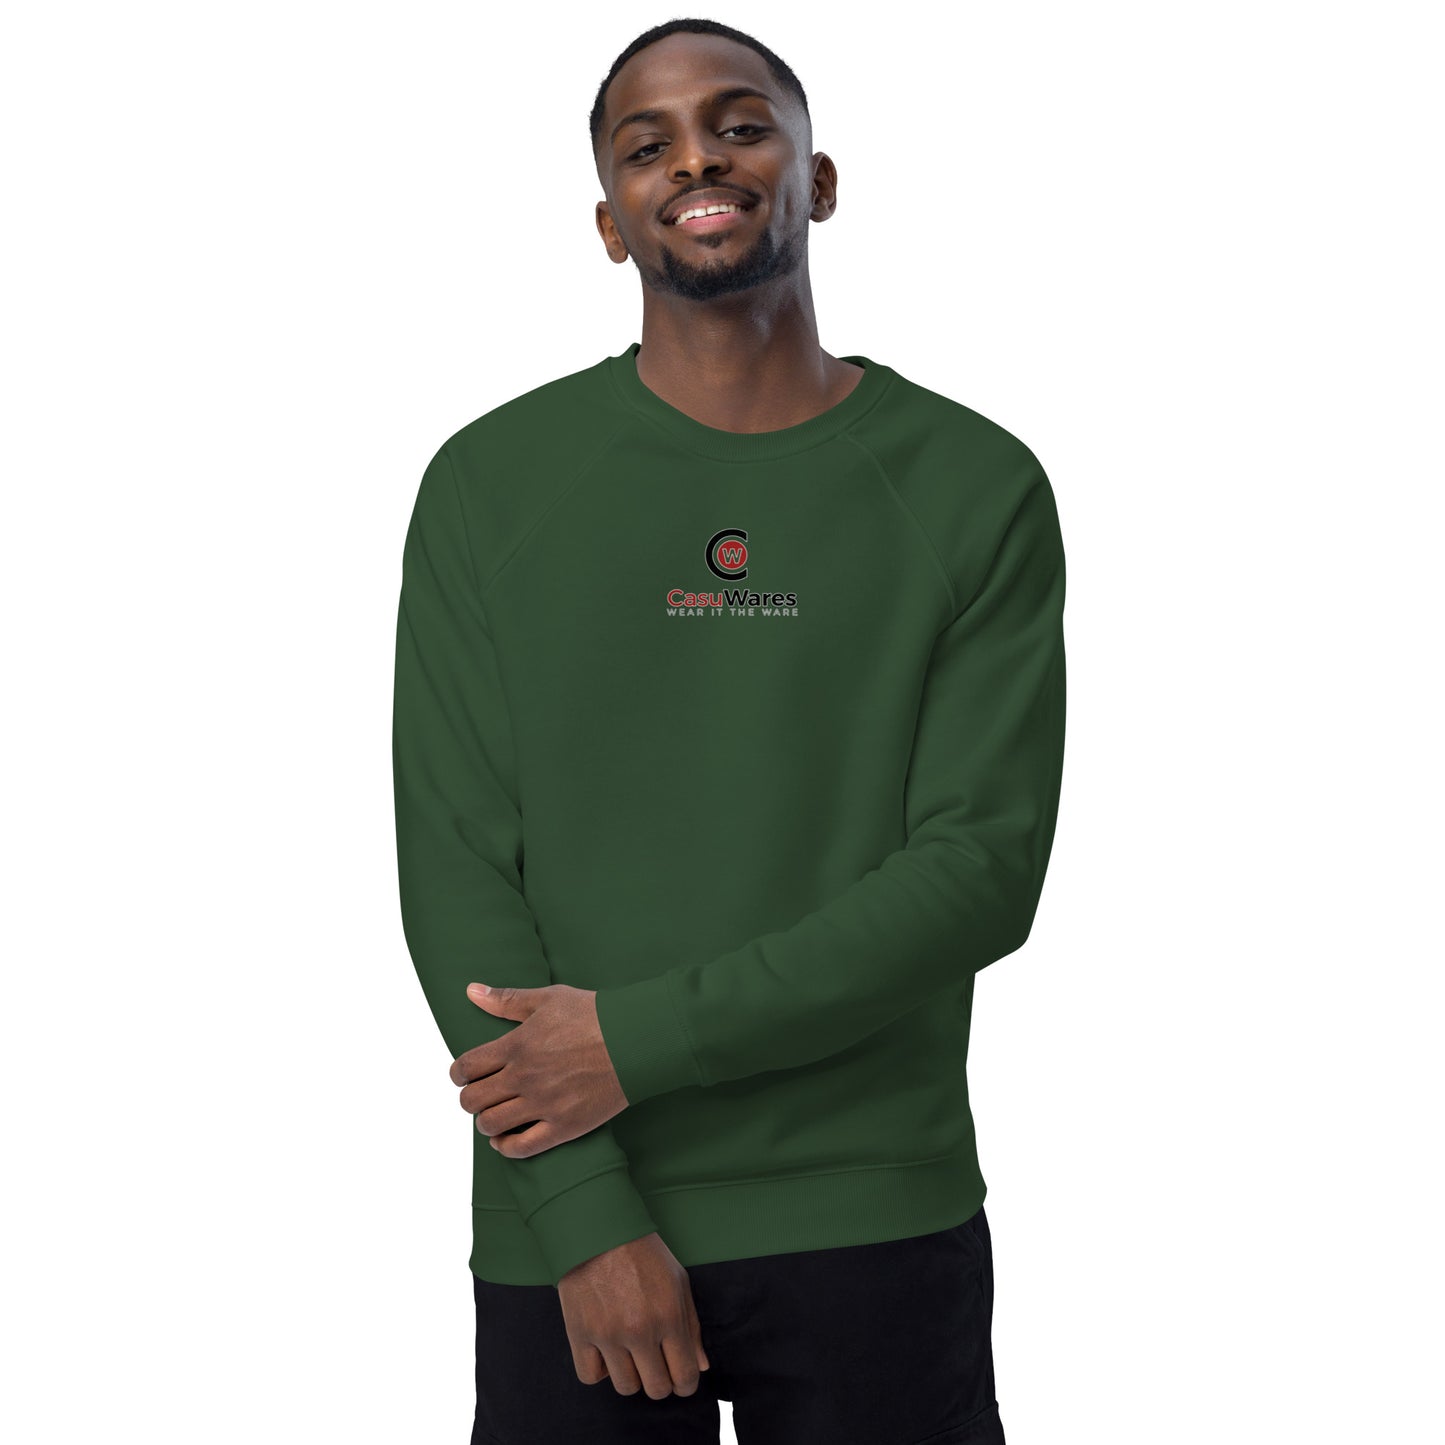 Men's organic raglan sweatshirt